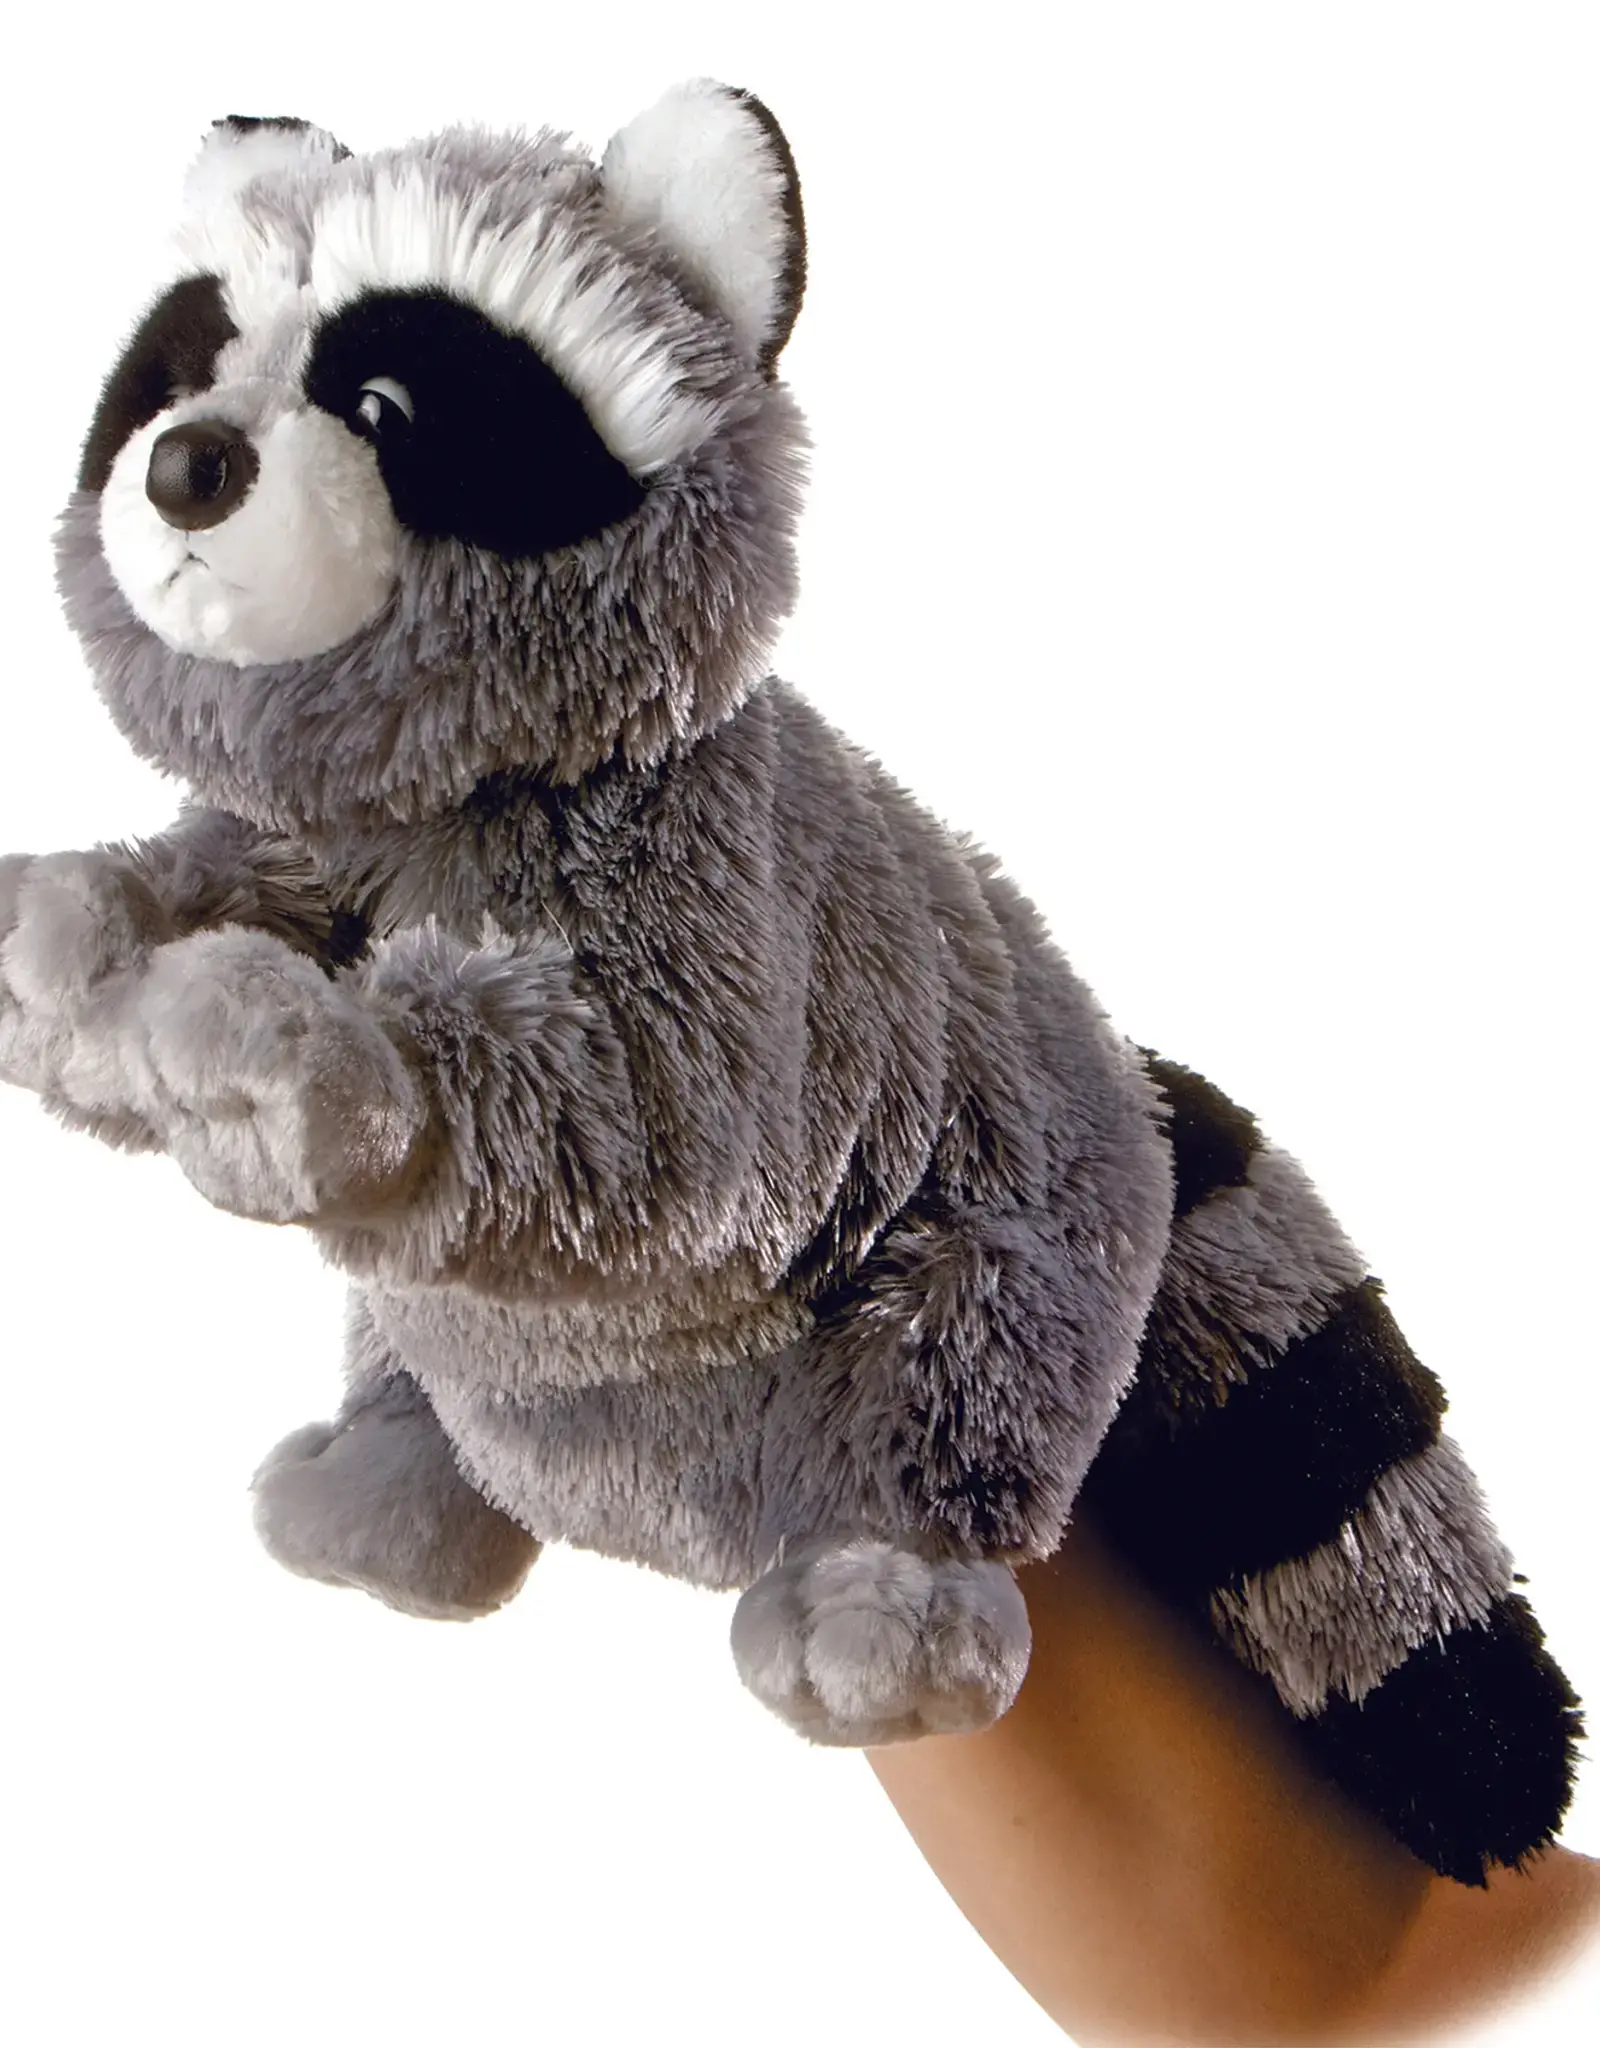 Plush - Bandit the Raccoon Puppet